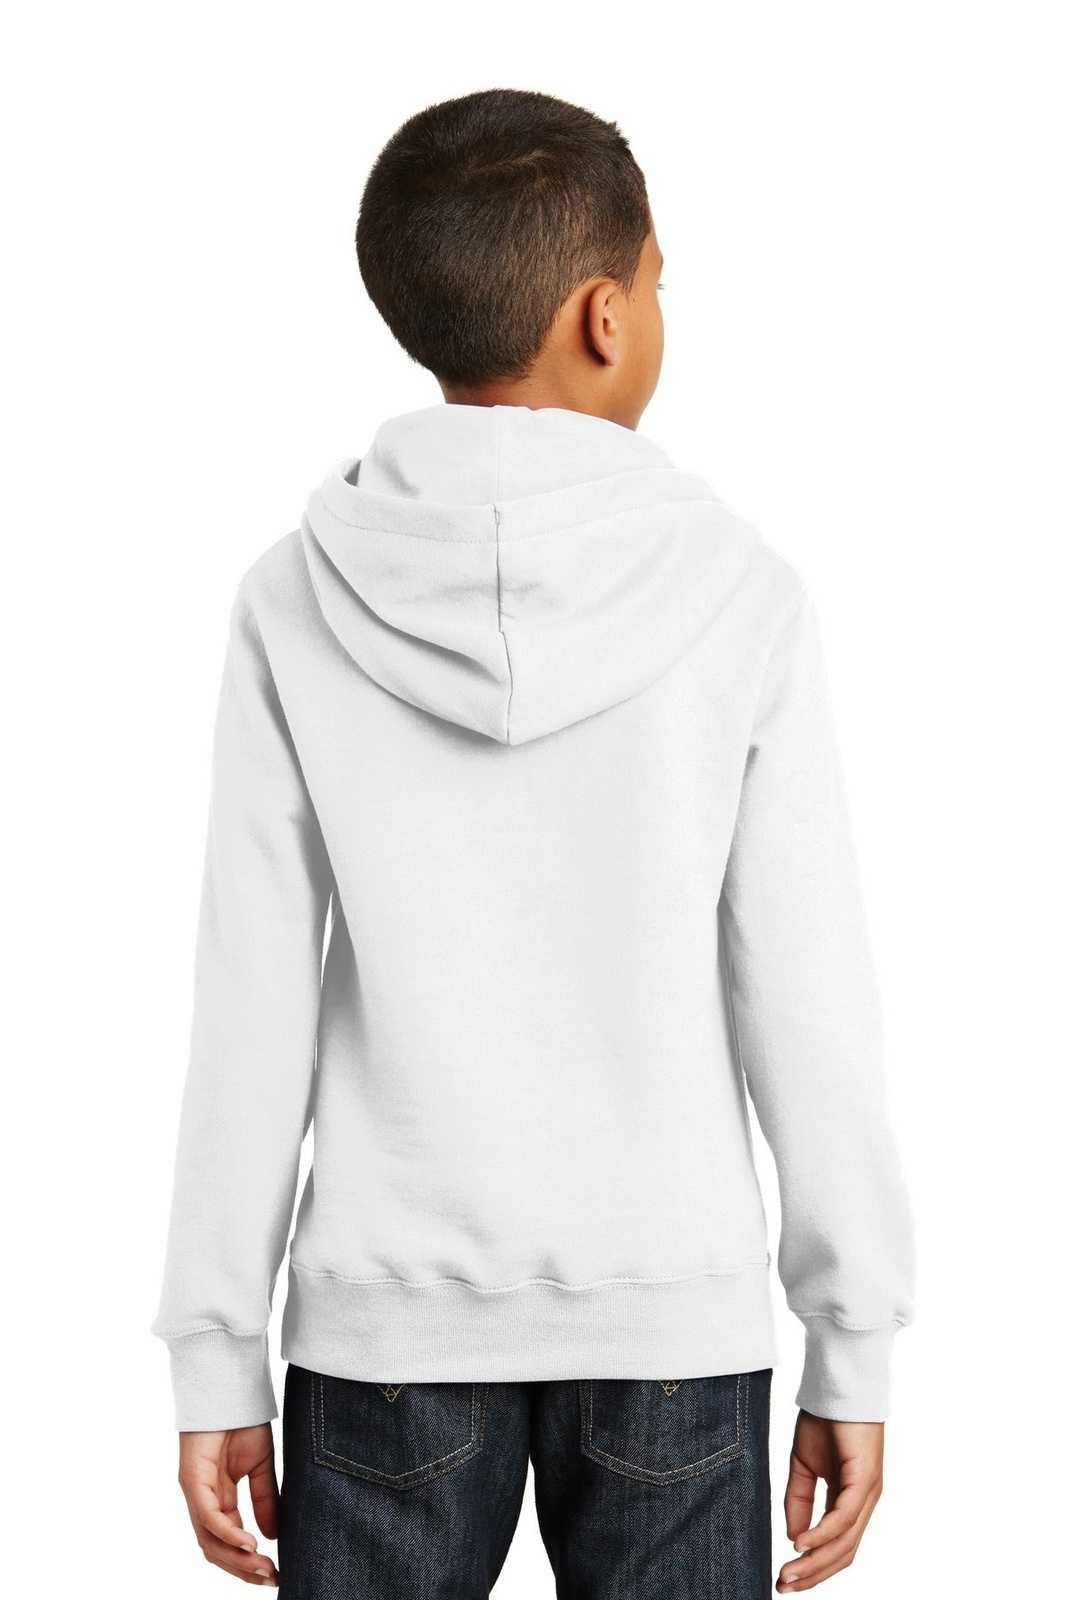 Port & Company PC850YH Youth Fan Favorite Fleece Pullover Hooded Sweatshirt - White - HIT a Double - 1